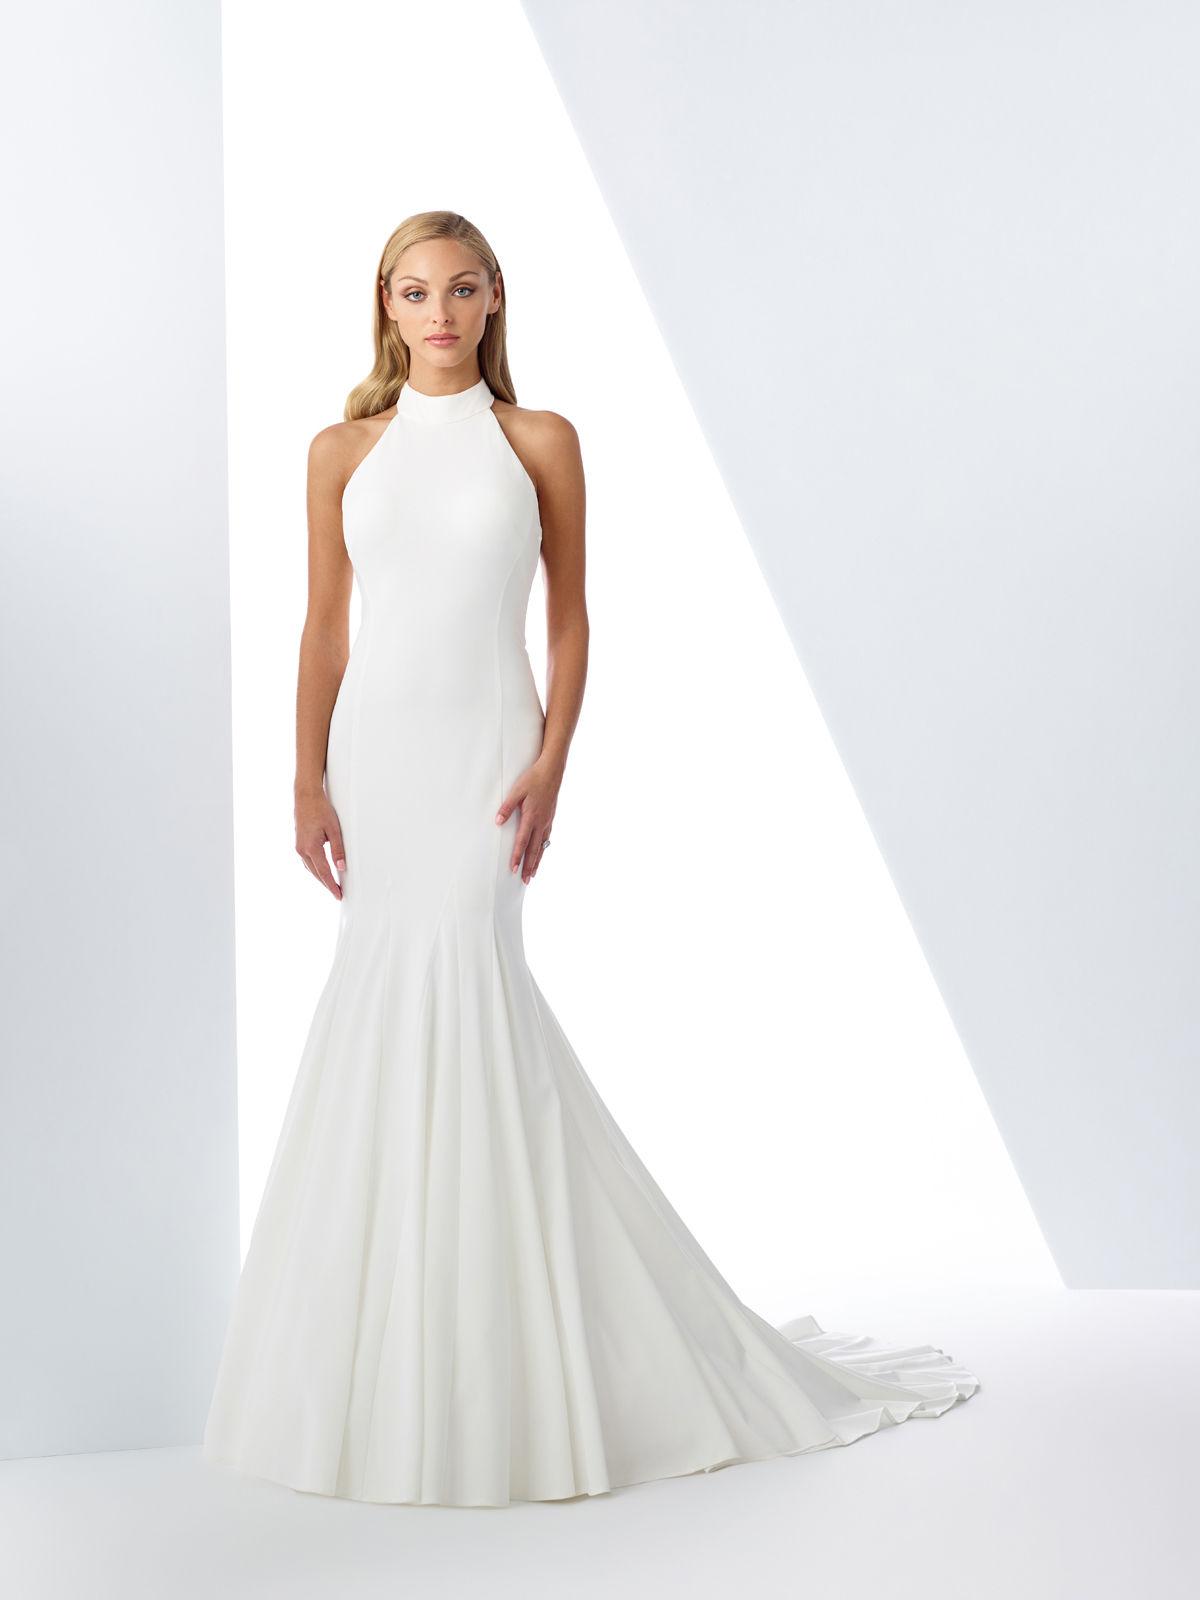 Concentre-se na beleza e singeleza deste vestido de noiva, decote gola alta com caimento e corte impecvel que deixam o modelo irresistvel.